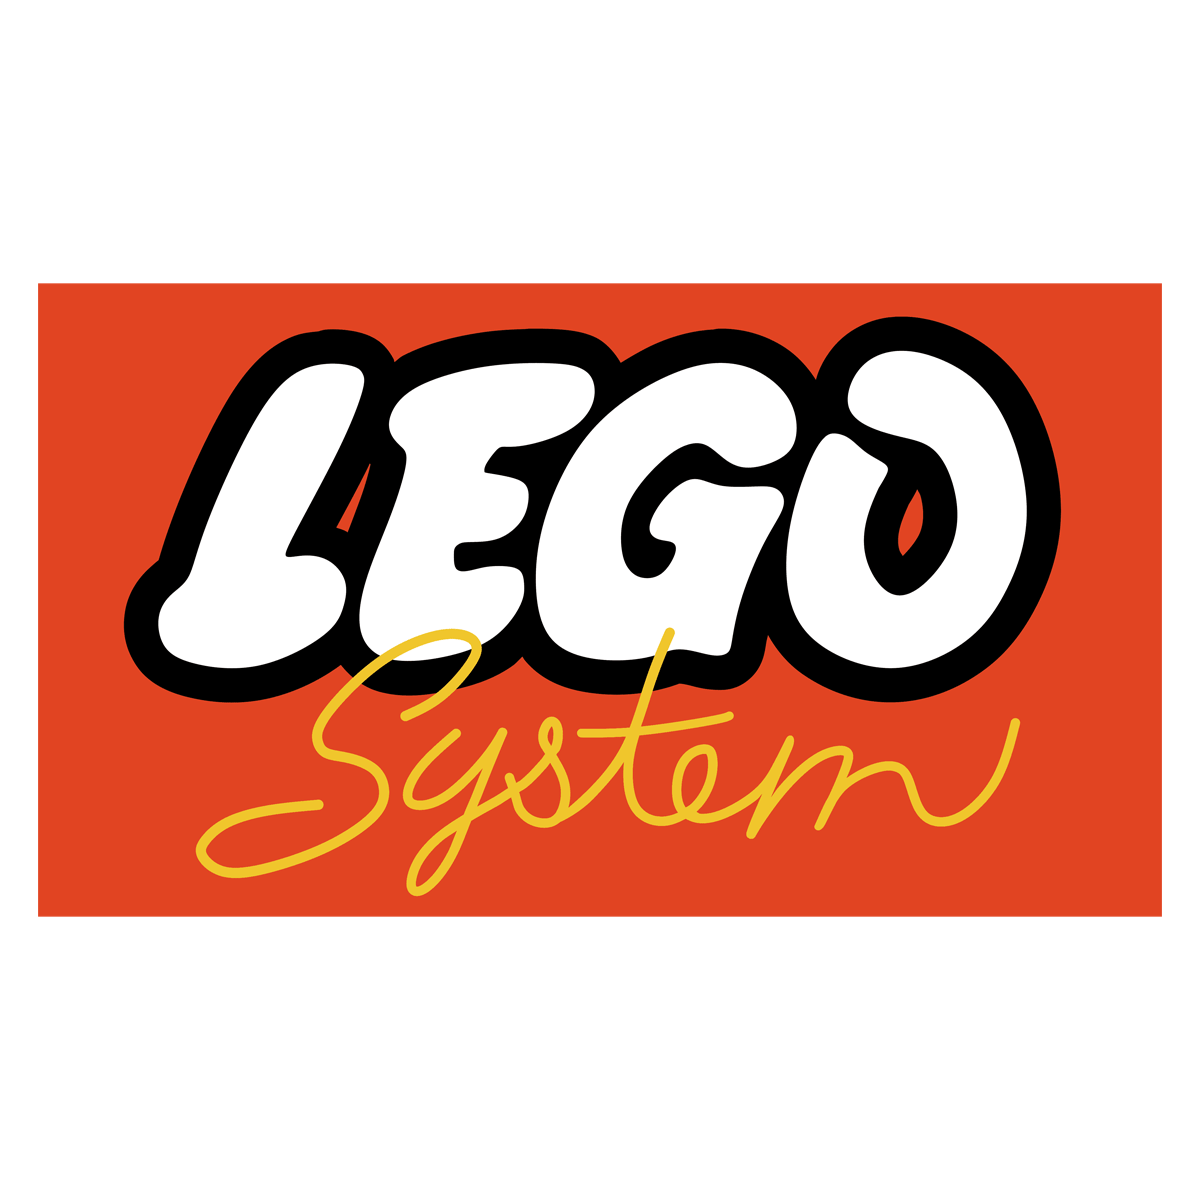 LEGO System Logo 1960-1964